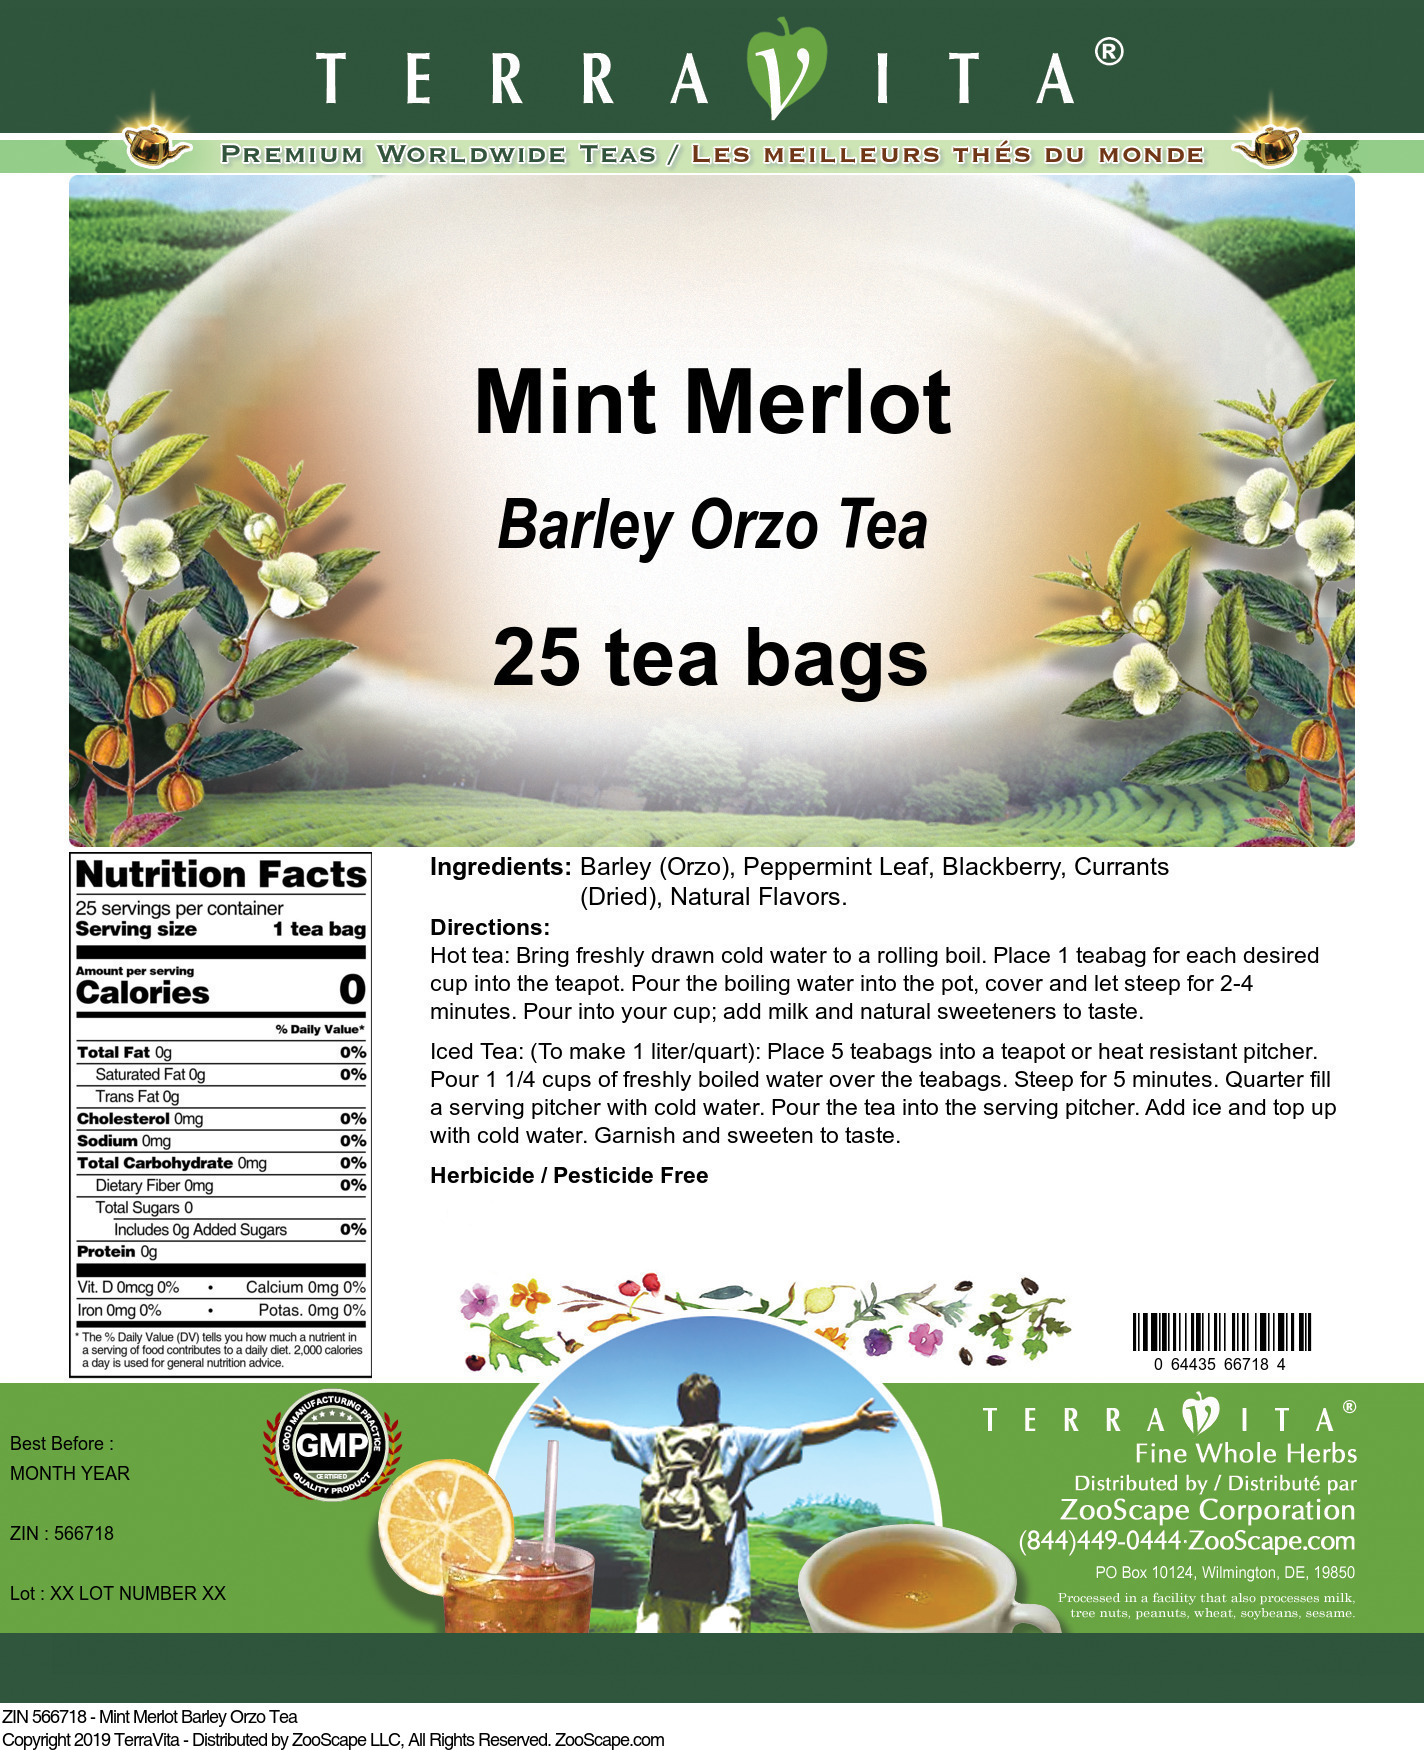 Mint Merlot Barley Orzo Tea - Label